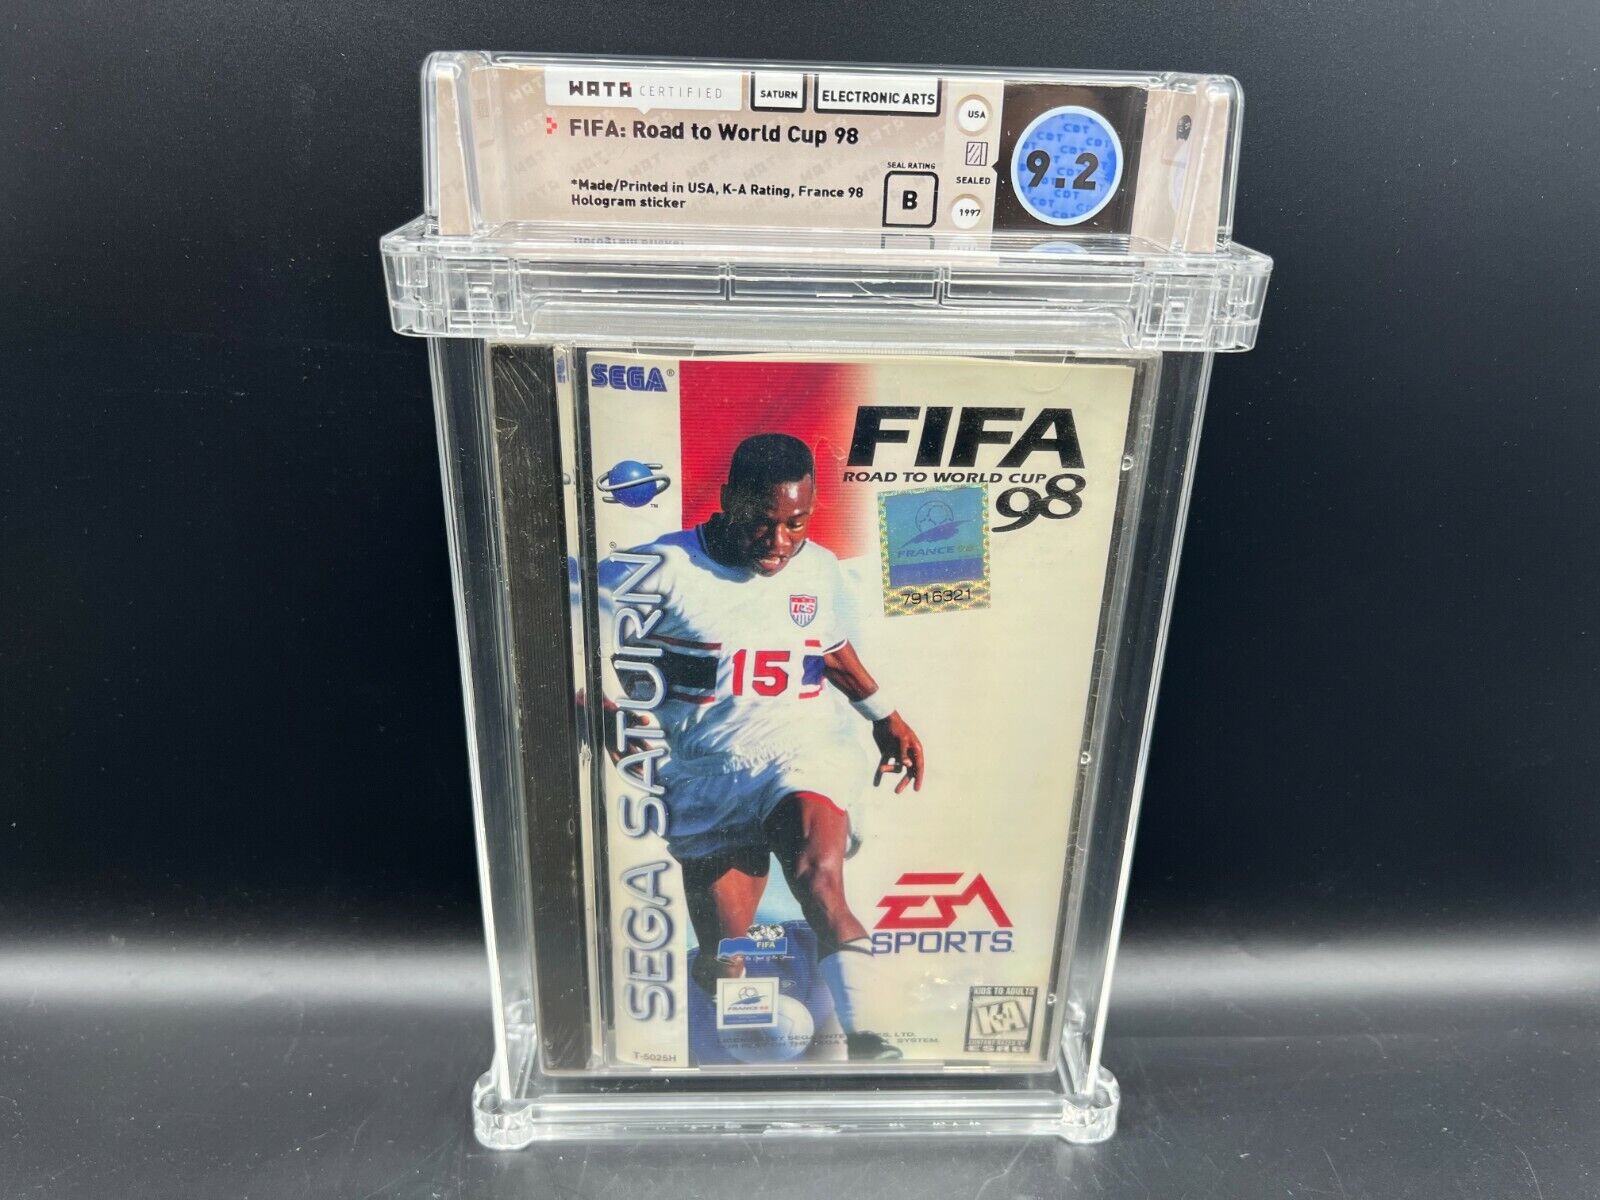 FIFA: Road to World Cup 98 Sega Saturn Lassiter WATA 9.2 B FACTORY SEALED VGA